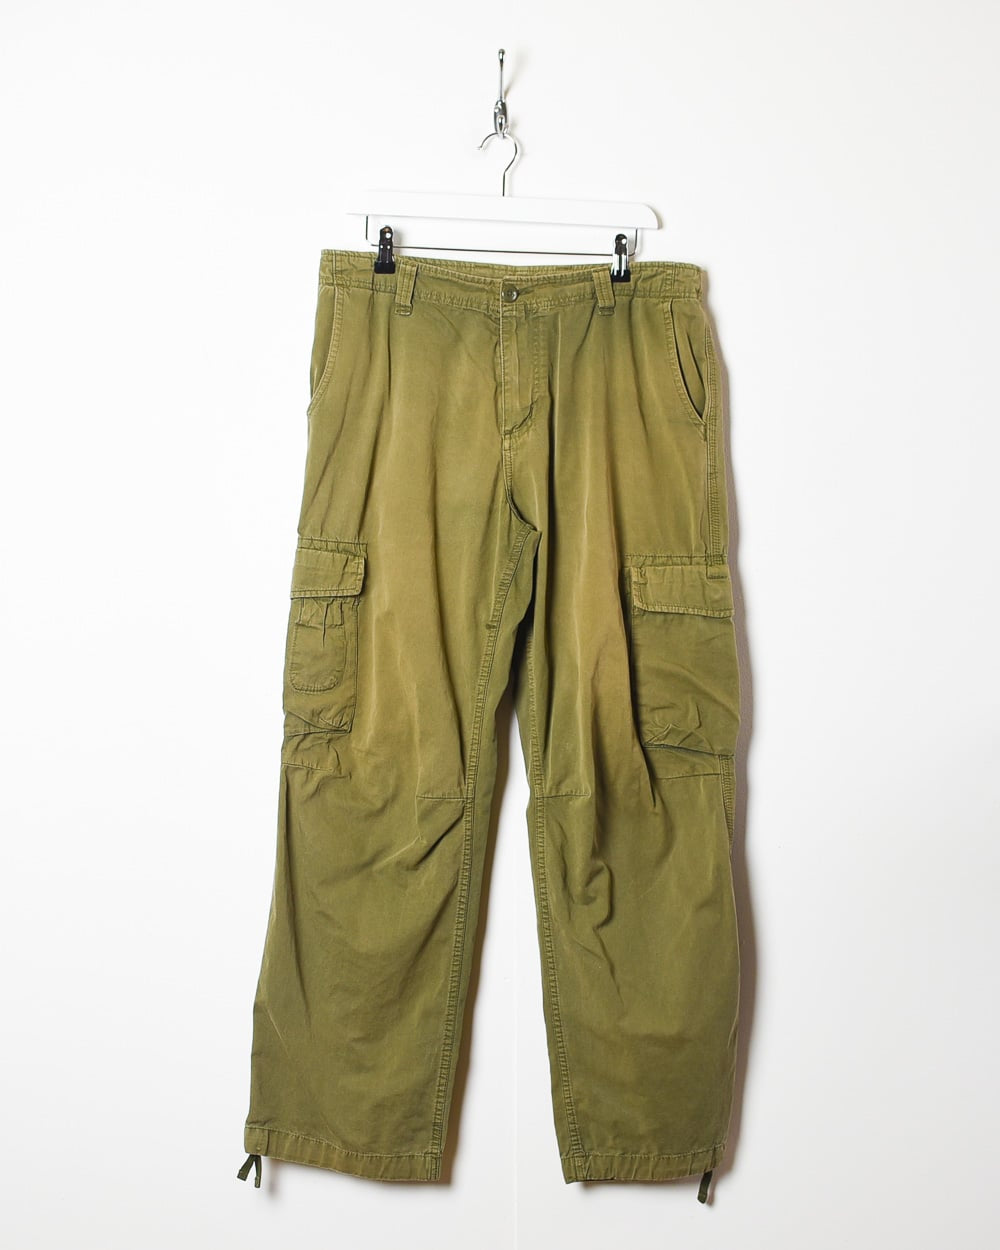 Khaki Carhartt Cargo Trousers - W34 L30